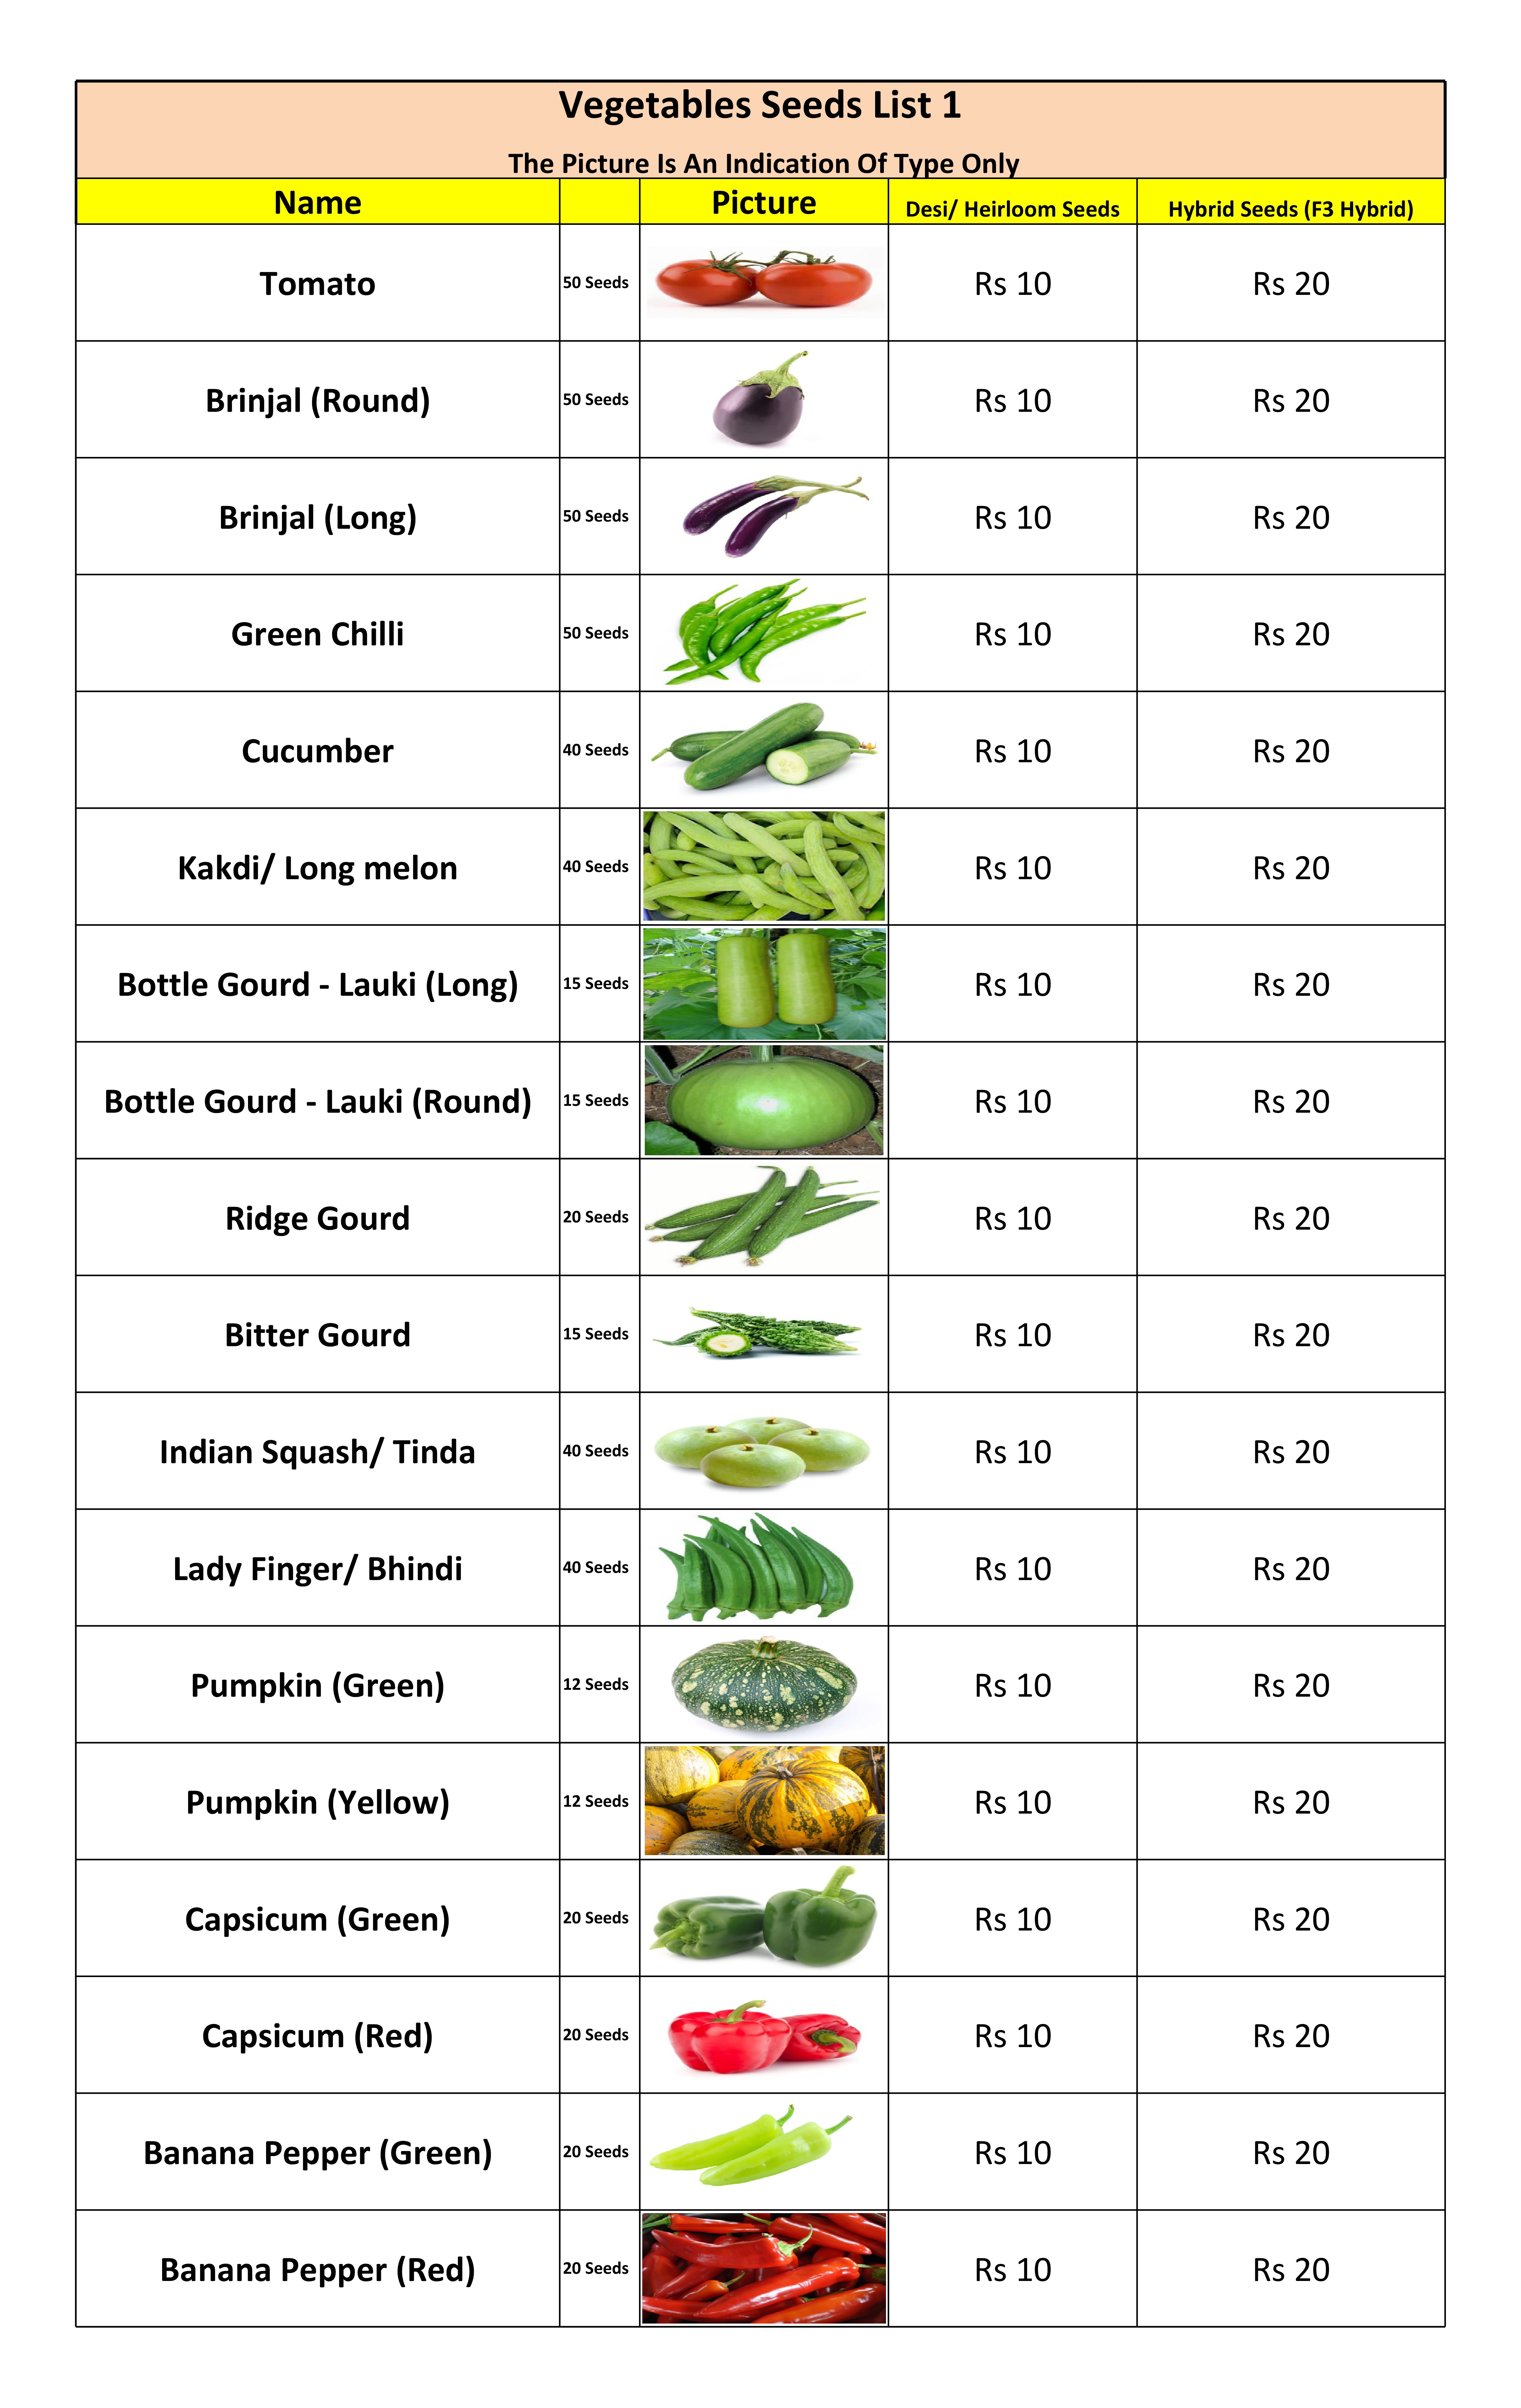 Vegetables - List 1